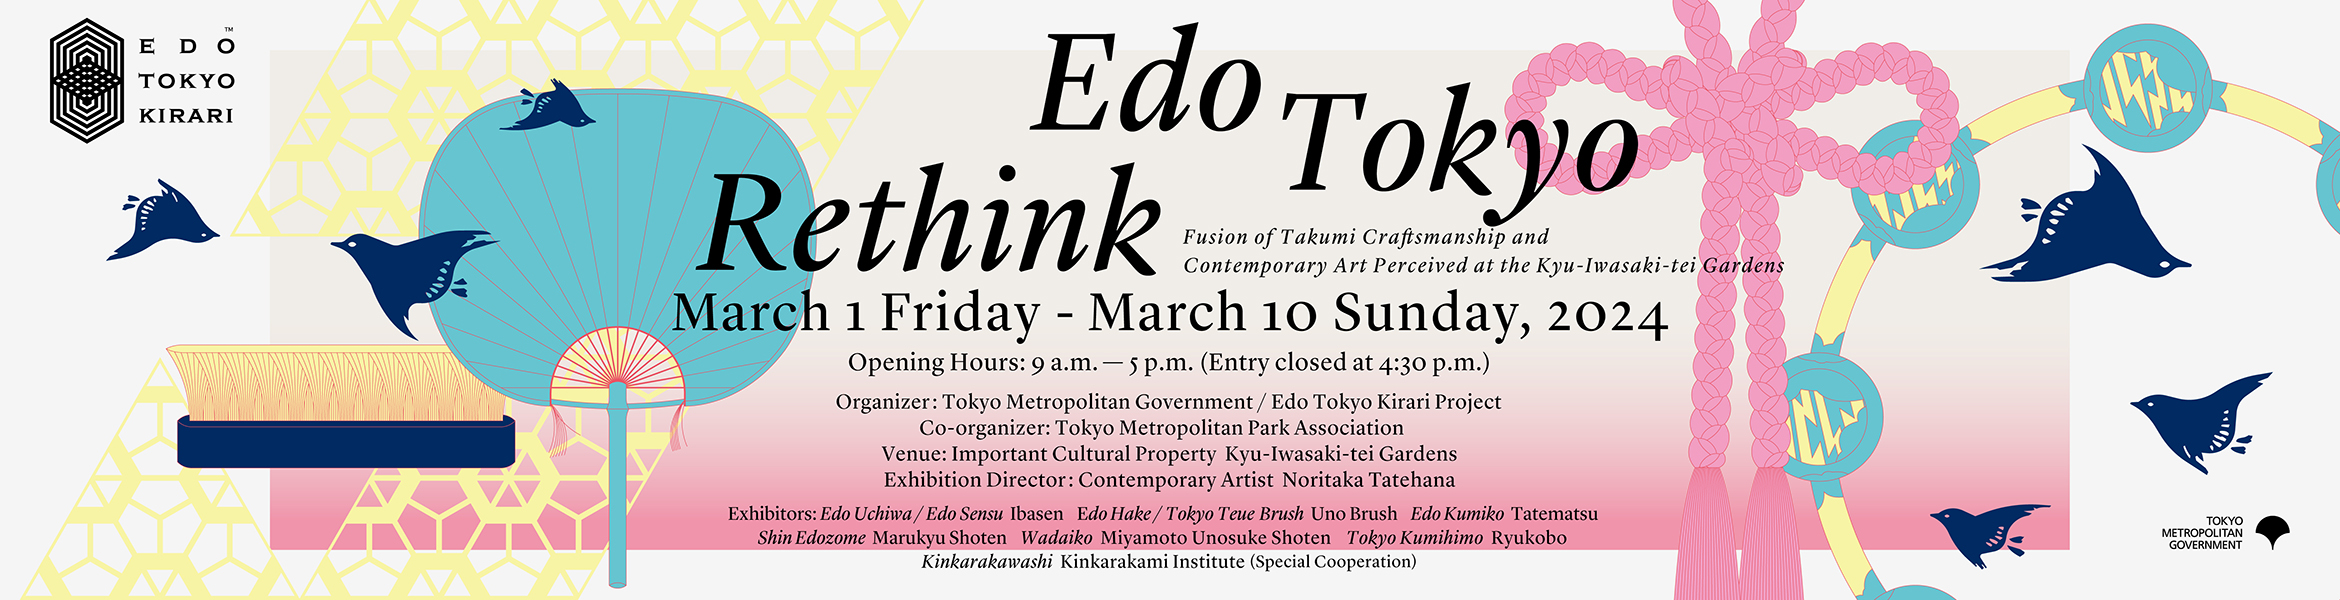 EDO TOKYO RETHINK Fusion of Takumi Craftsmanship and Contemporary Art Perceived at the Kyu-Iwasaki-tei Gardens